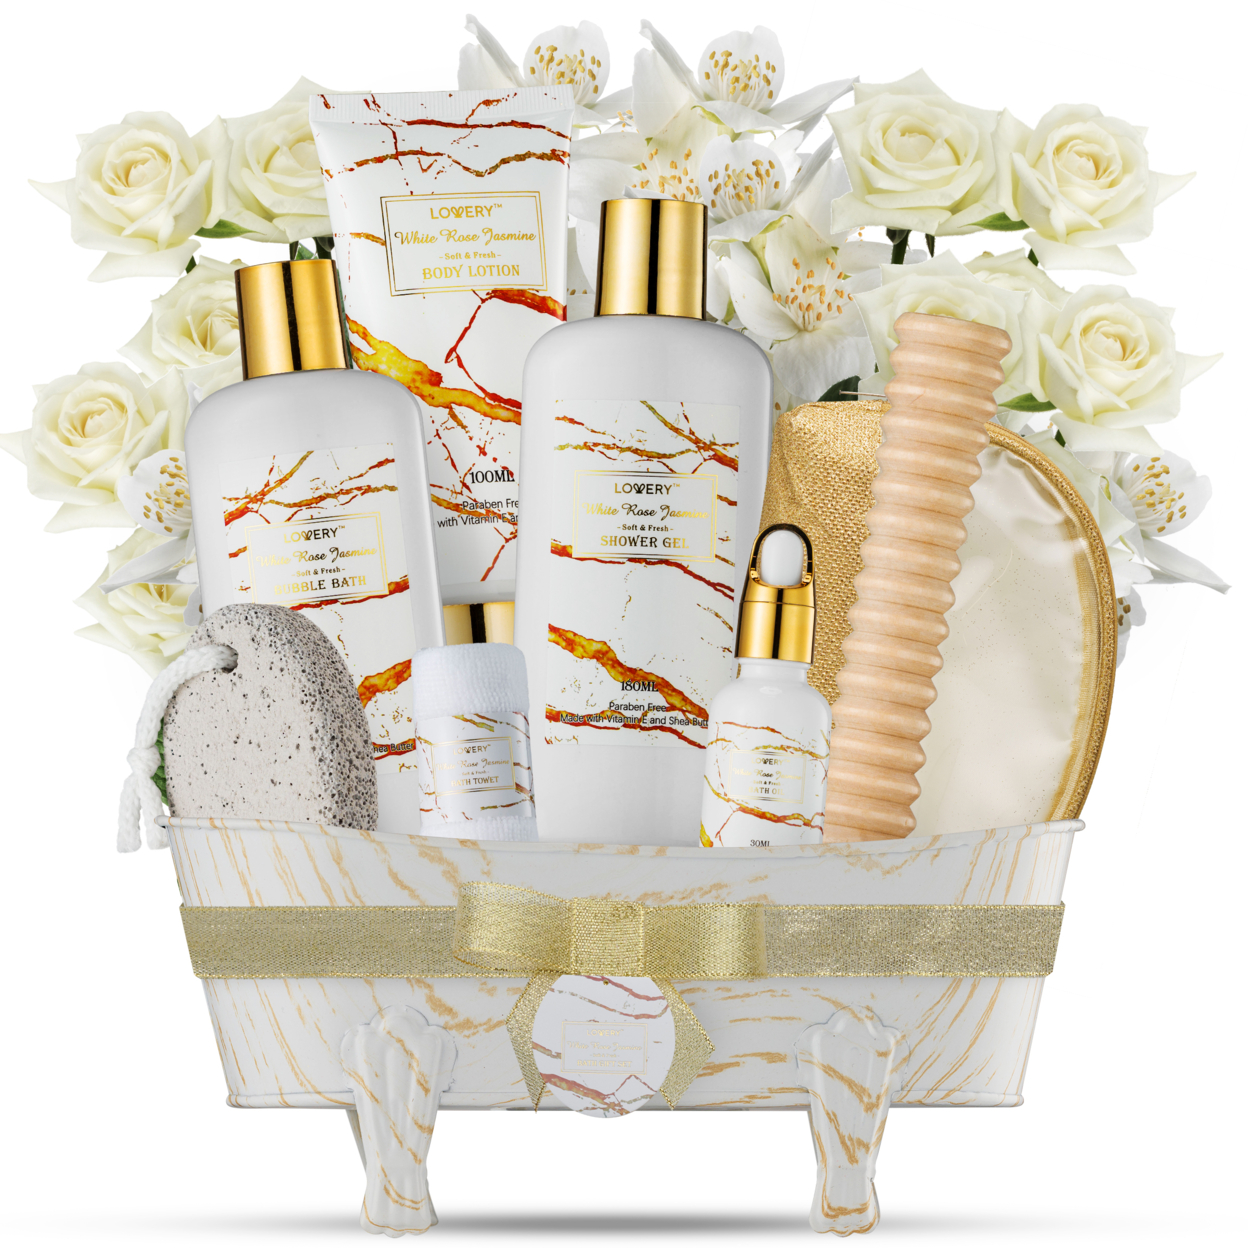 Home Spa Gift Basket, Self Care Gifts, White Rose Jasmine Bath & Body Gift Basket